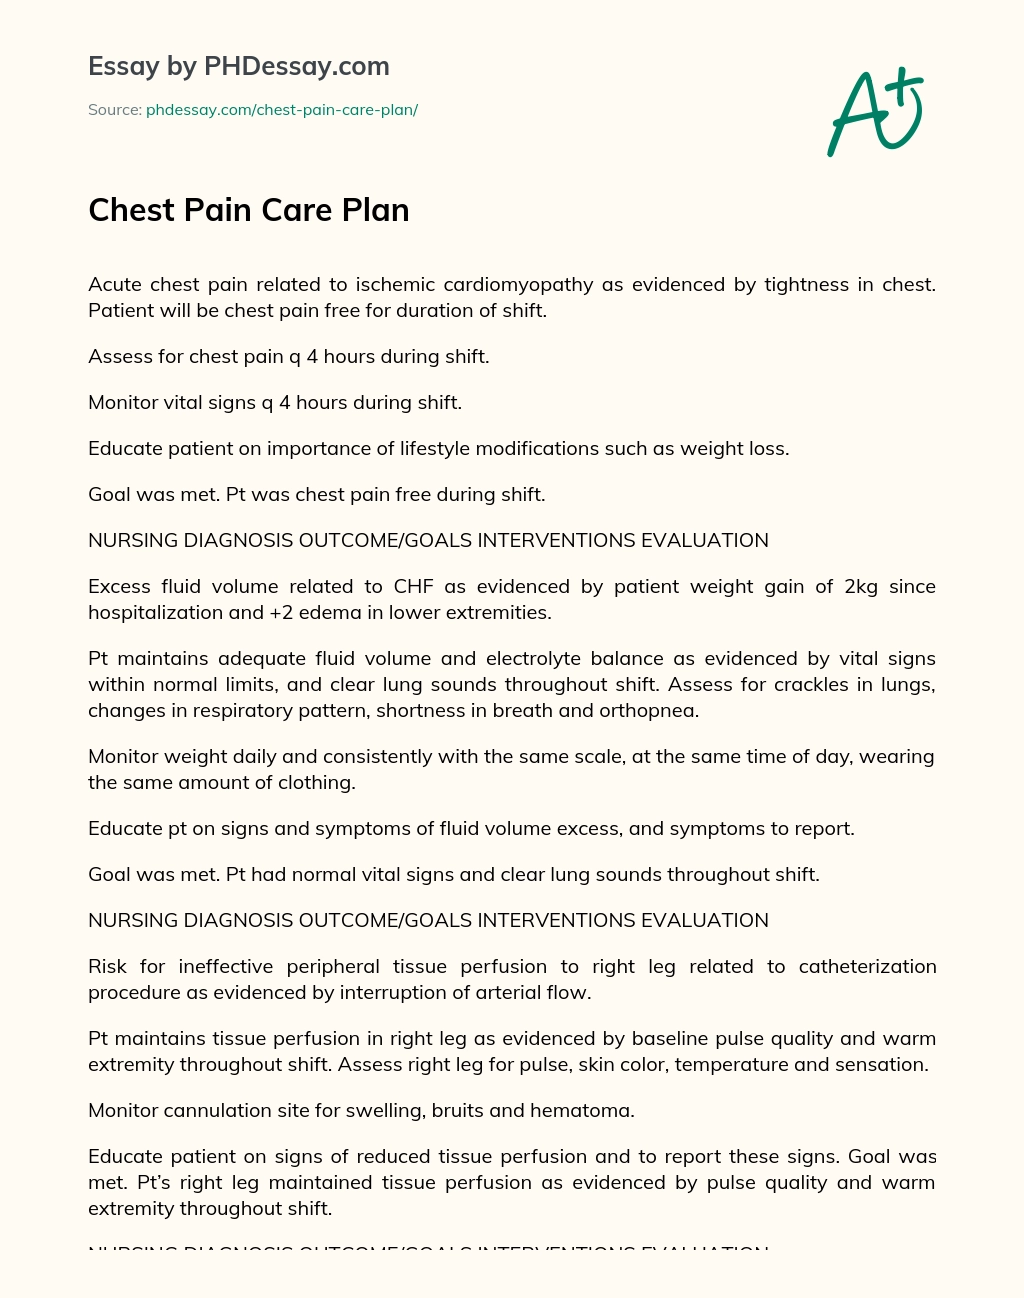 Chest Pain Care Plan essay